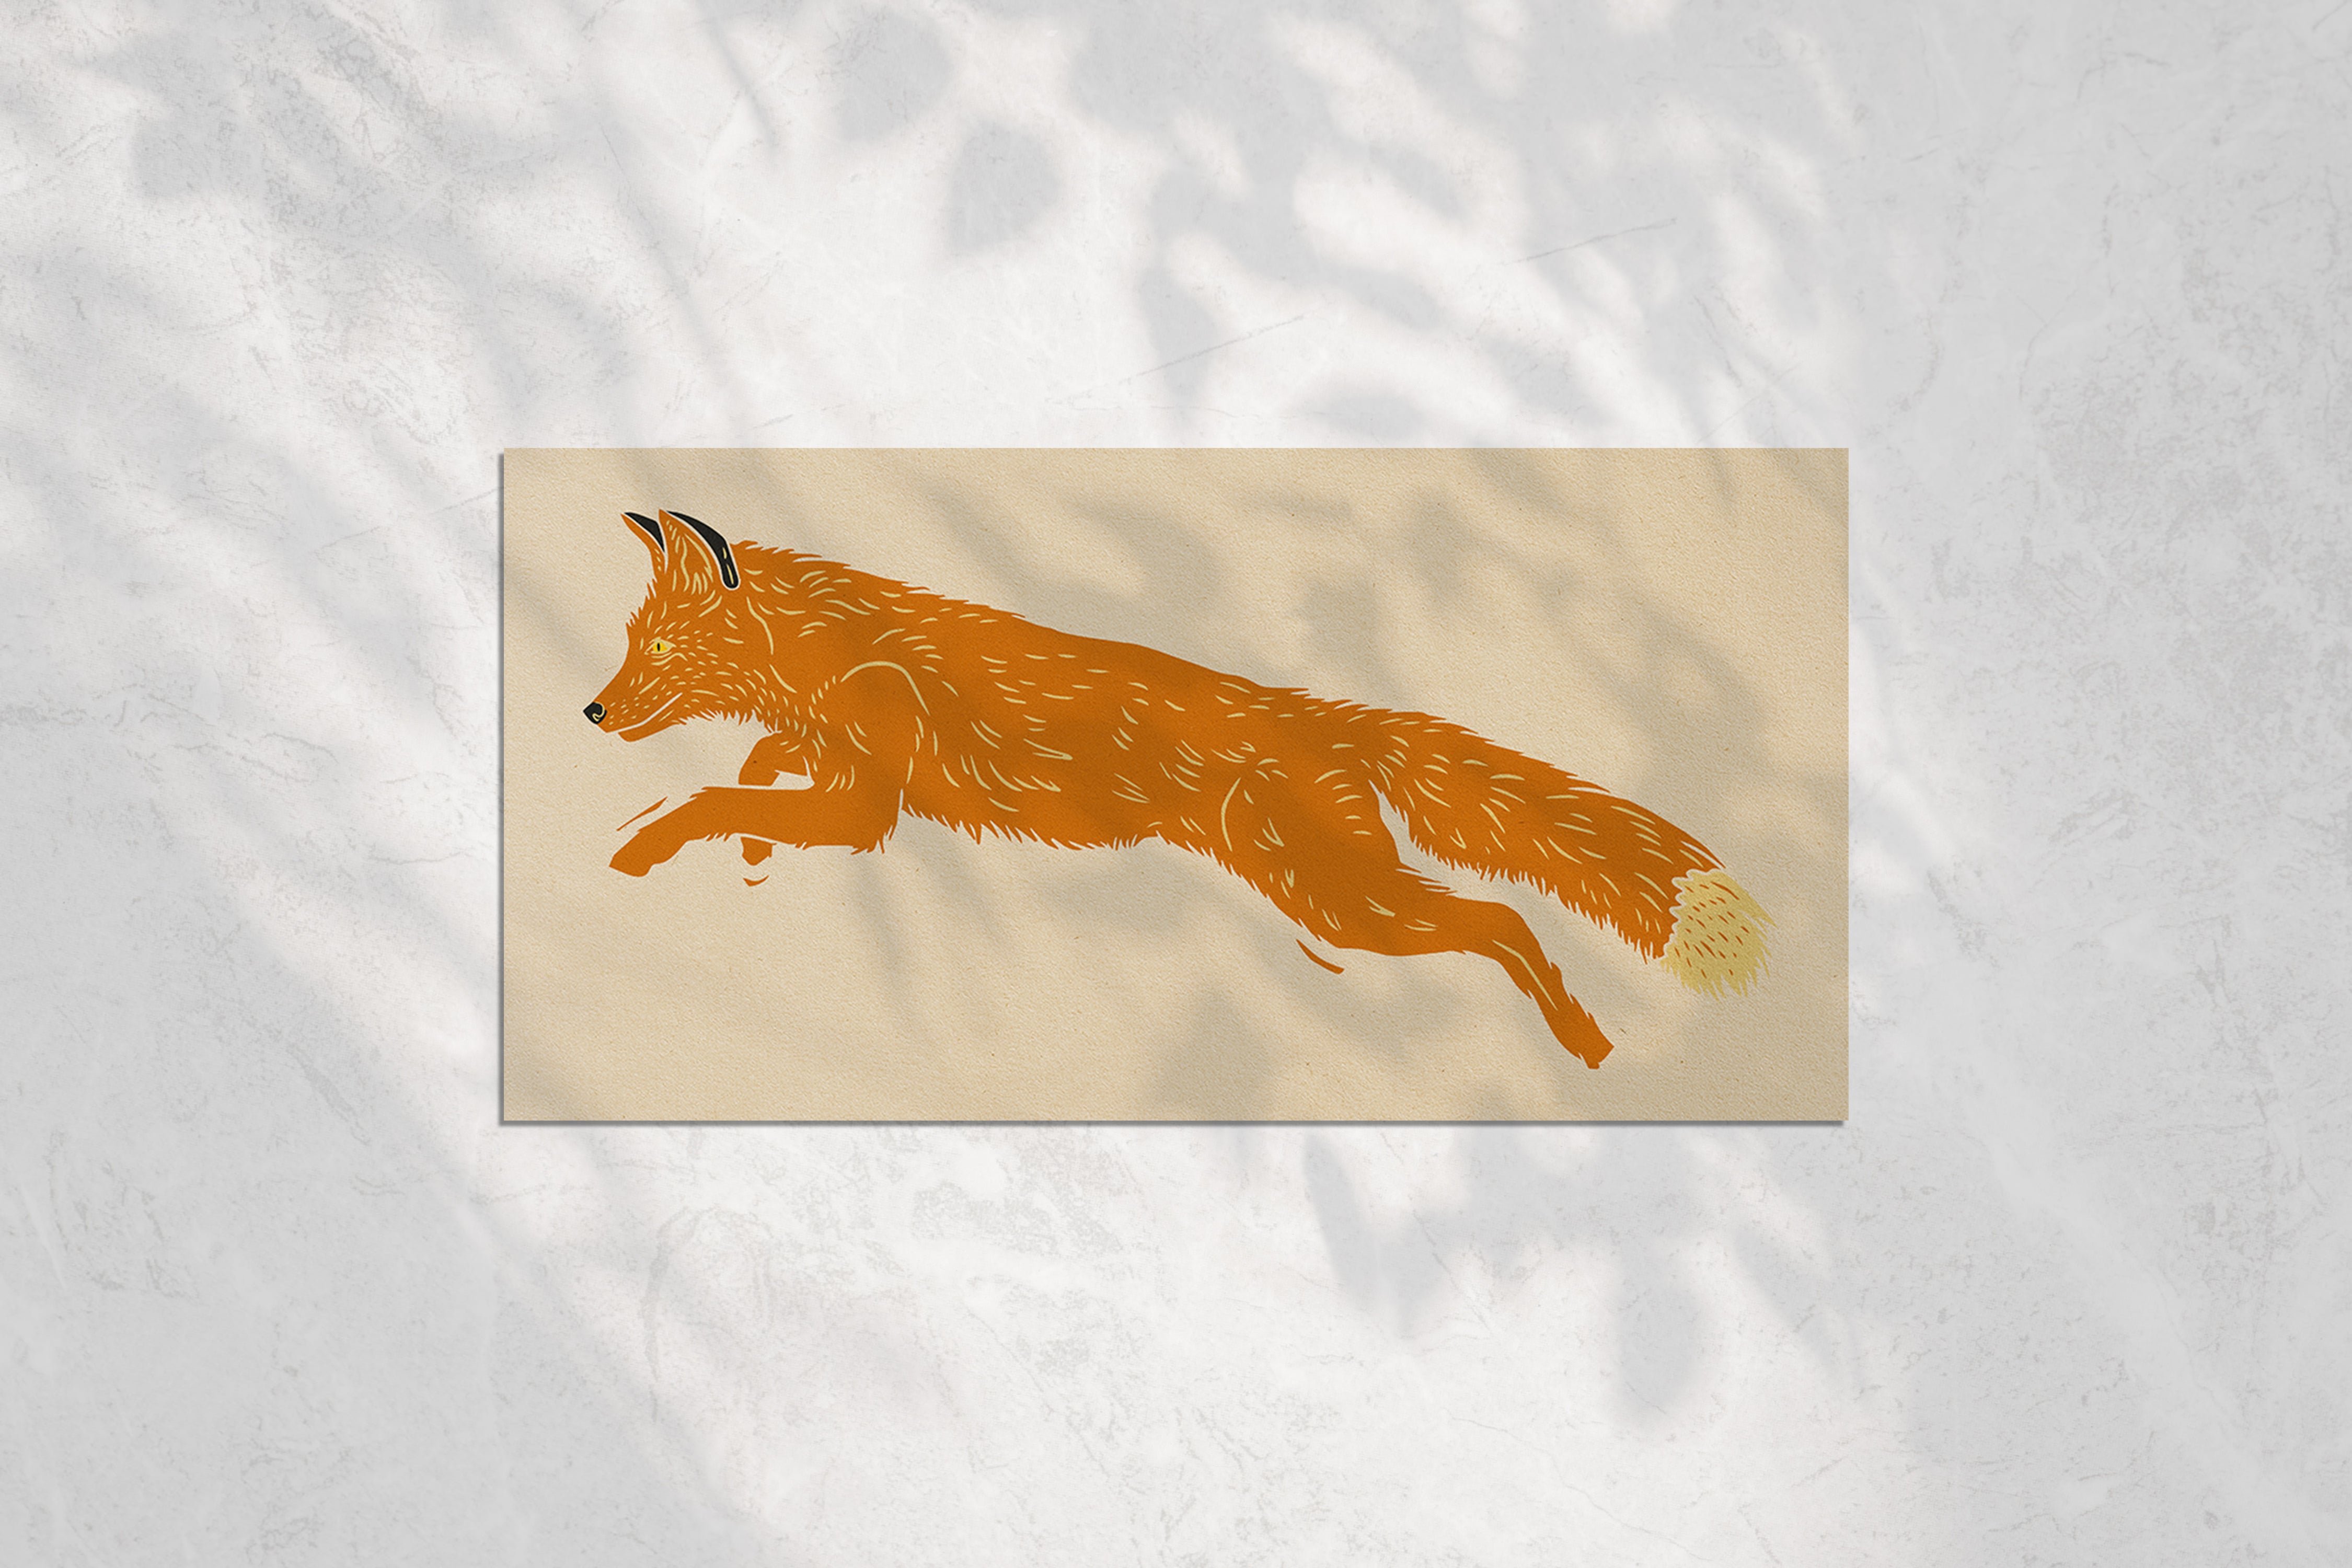 Red Fox Print